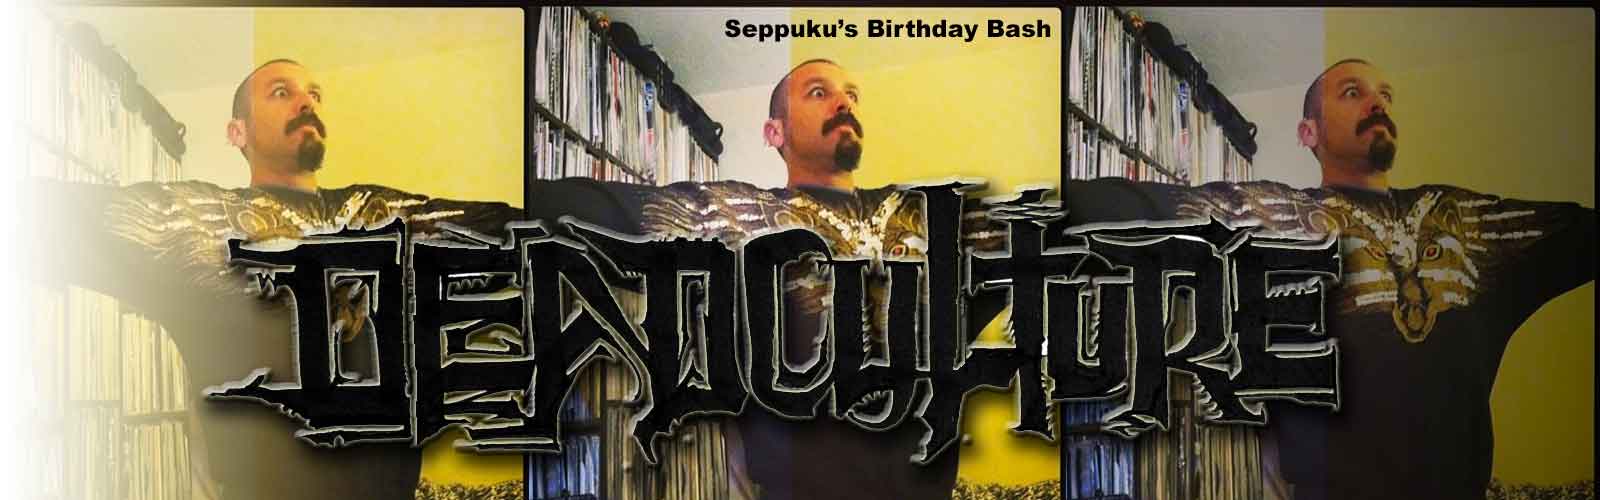 Seppuku's Birthday Bash 2015